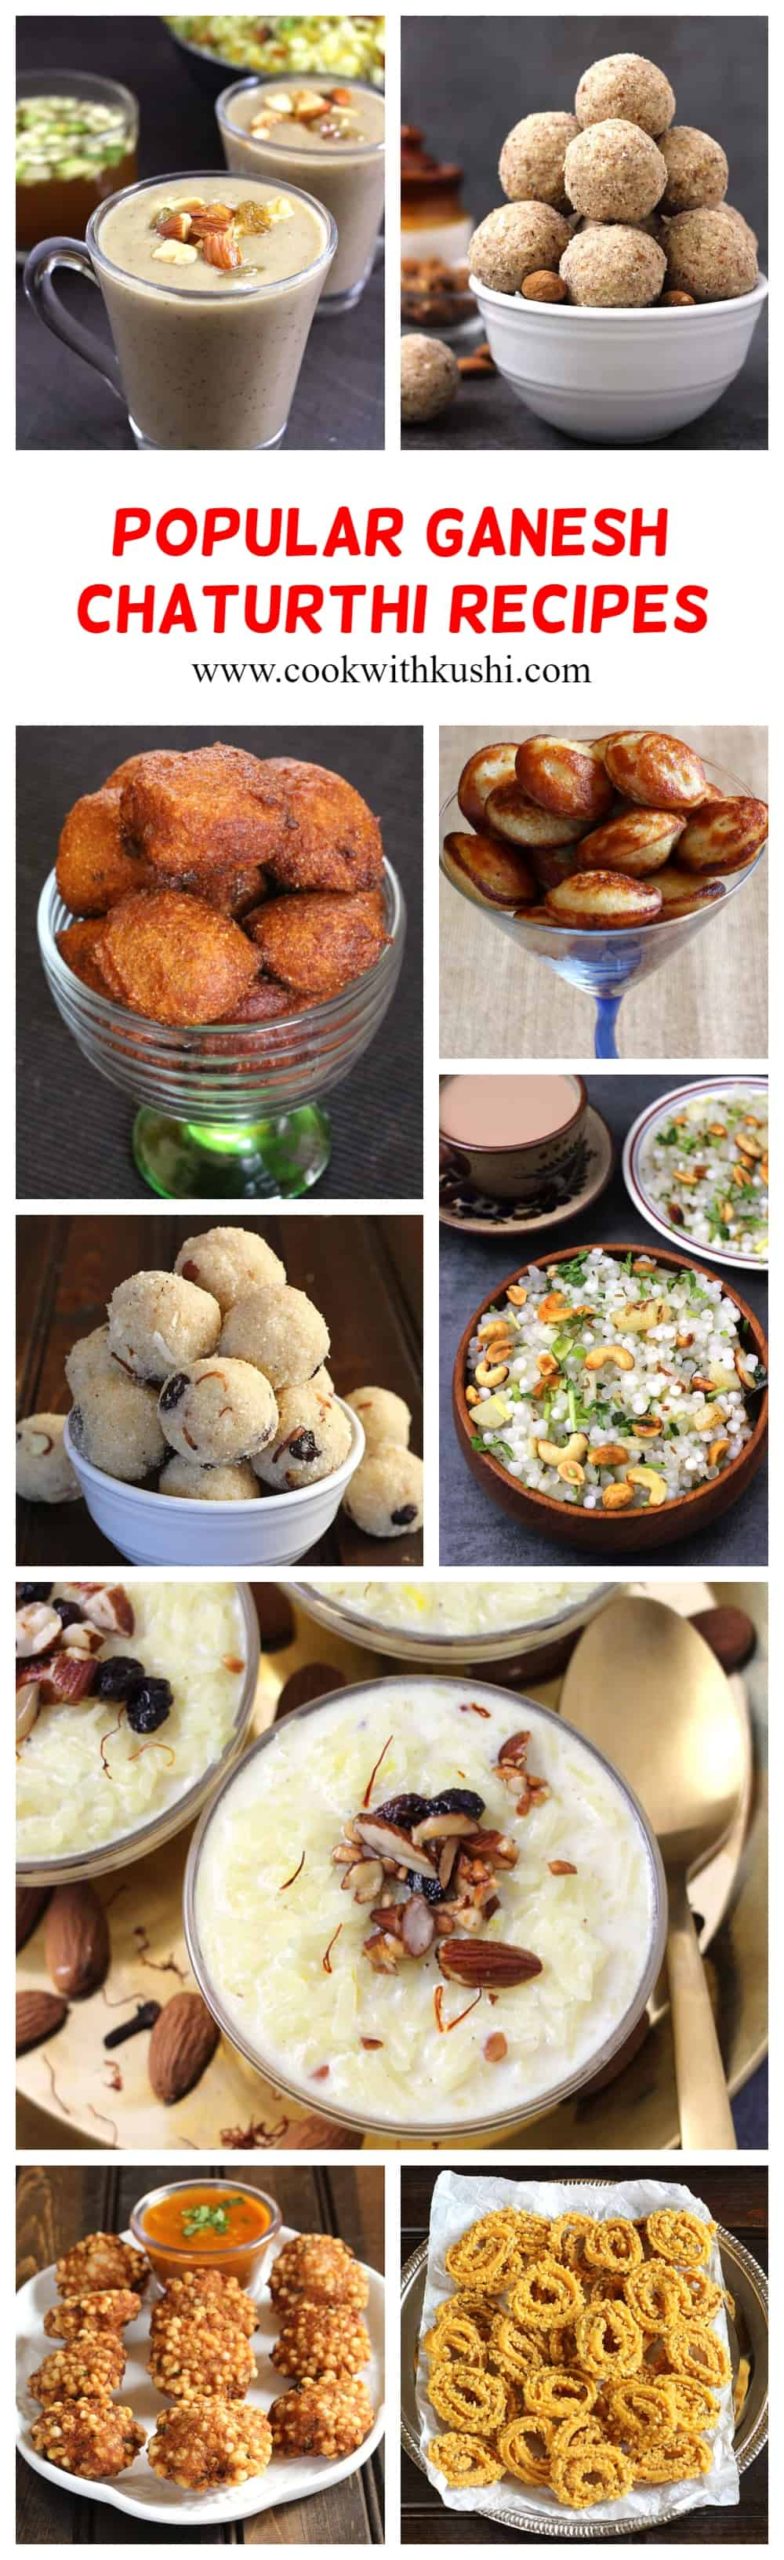 Ganesh Chaturthi Recipes , Vinayaka Chaturthi Recipes #ladoo #laddu #modak #appe #appo #paniyaram #nevri #gujiya #payasam #kheer naivedyam or prasadam or prasad recipes for Lord Ganesha, sabudana, no onion no garlic recipes